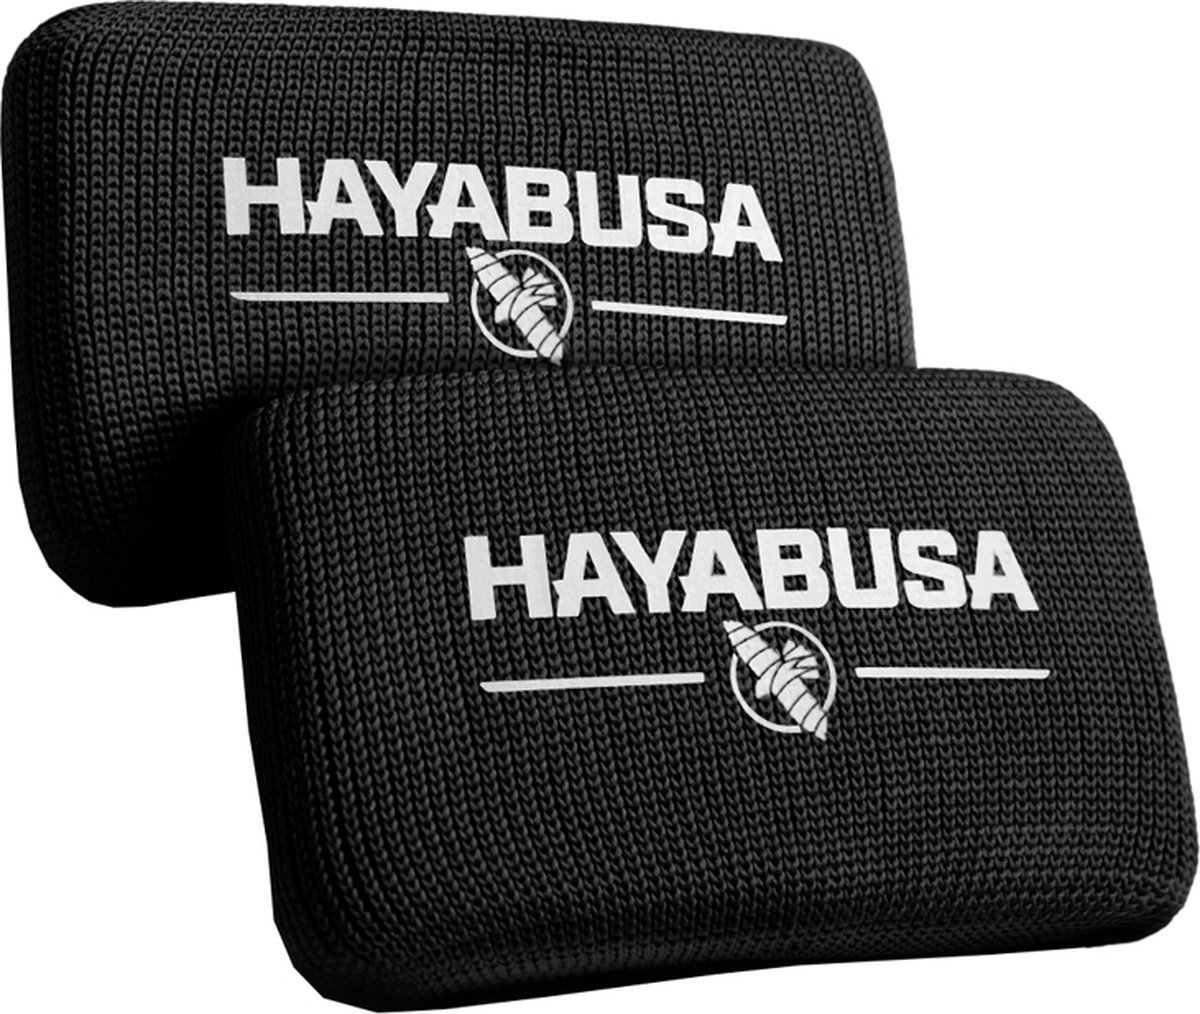 Hayabusa Boks Knokkelbeschermers - zwart - maat L/XL - Hayabusa